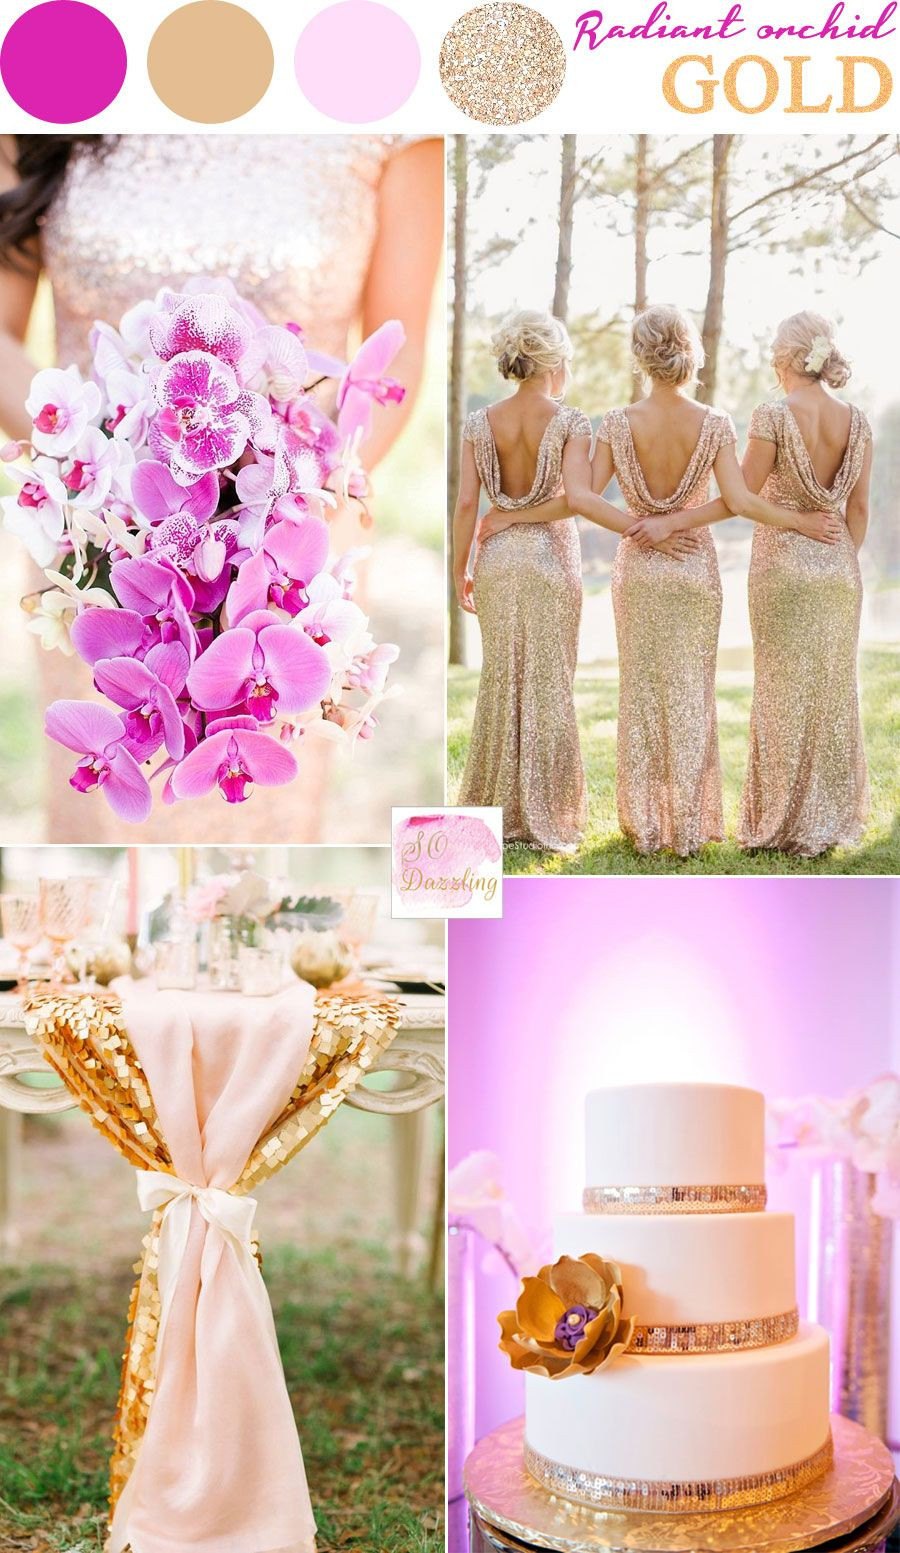 February Wedding Themes
 งานแต่งสีม่วง ผสม สีทอง Radiant Orchid Gold 